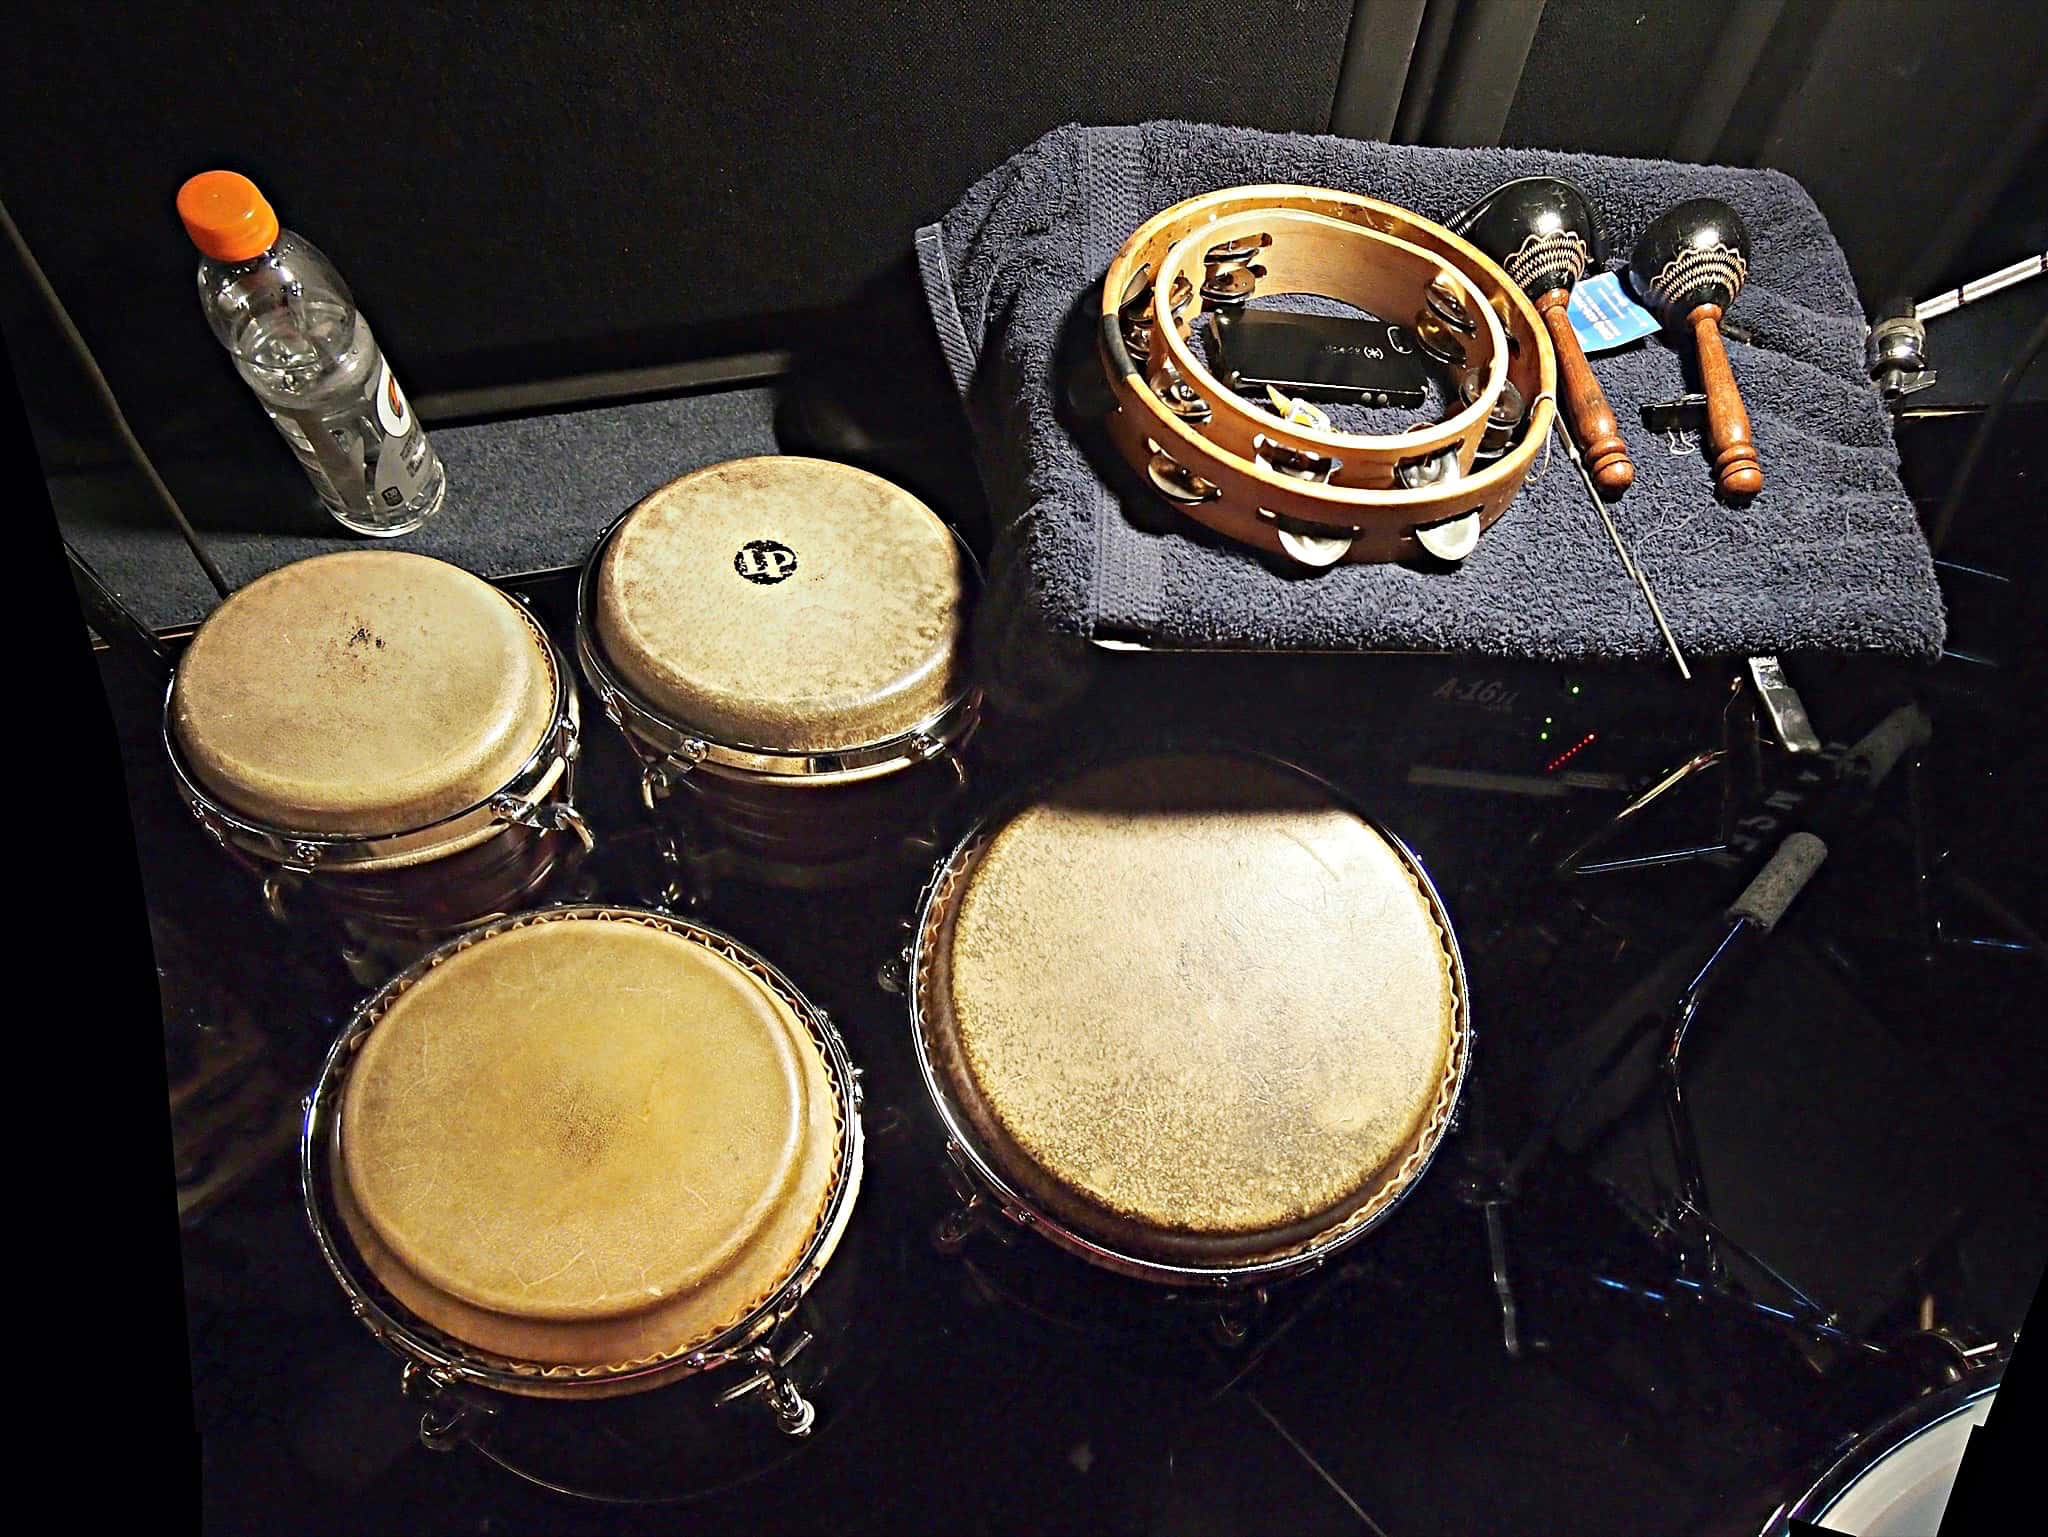 Paul Hansen's percussion setup for A Chorus Line at The 5th Avenue Theatre in Seattle, Washington.